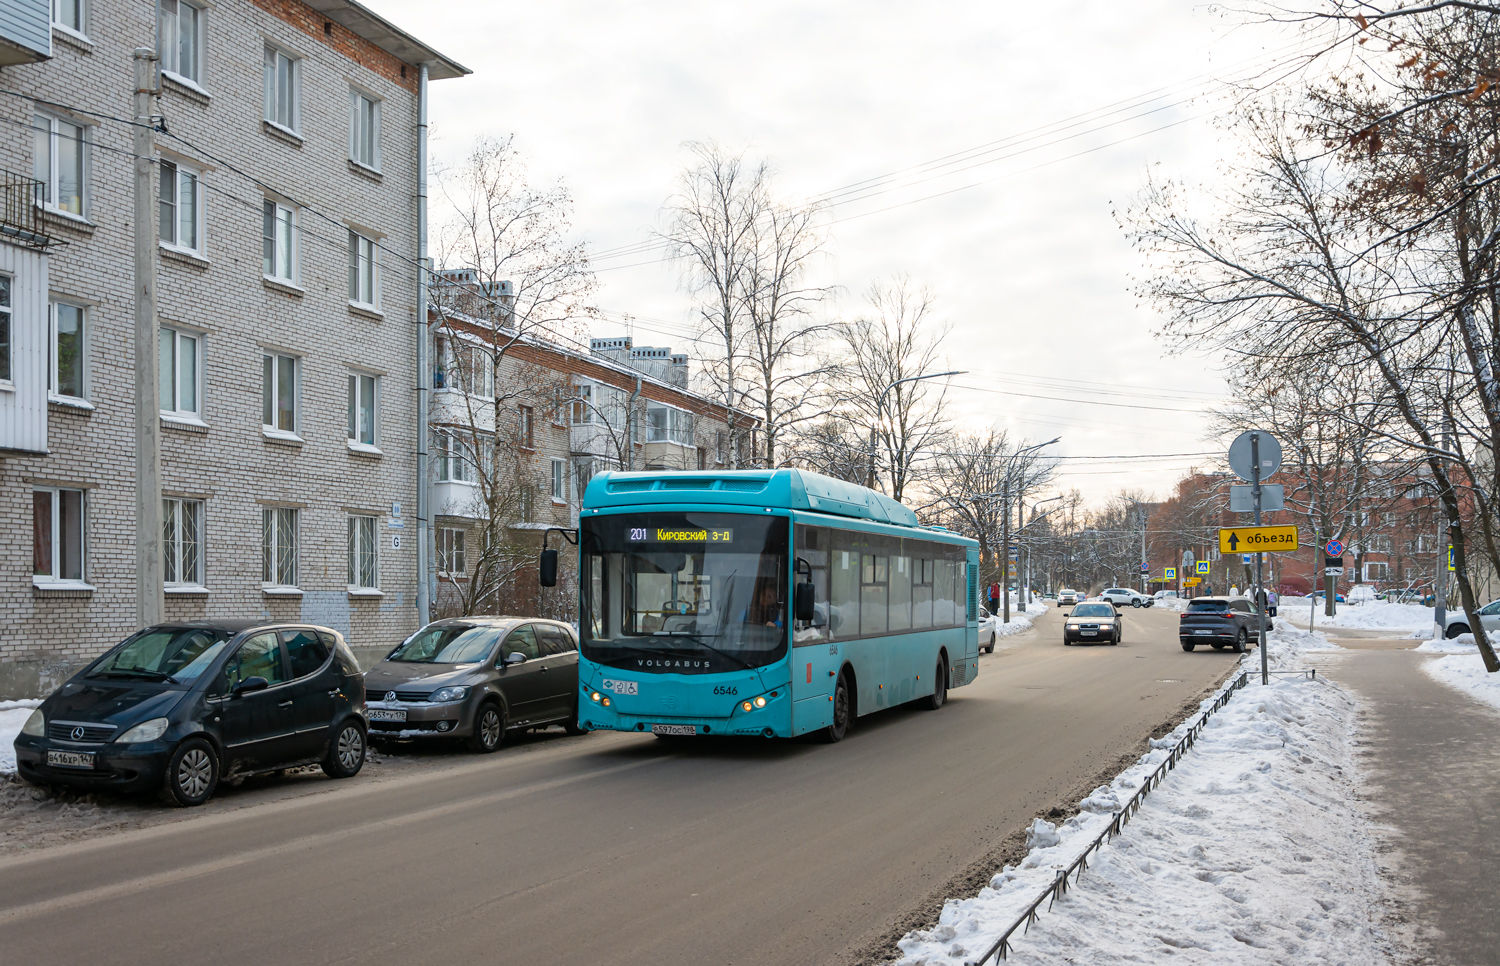 Saint Petersburg, Volgabus-5270.G4 (CNG) # 6546